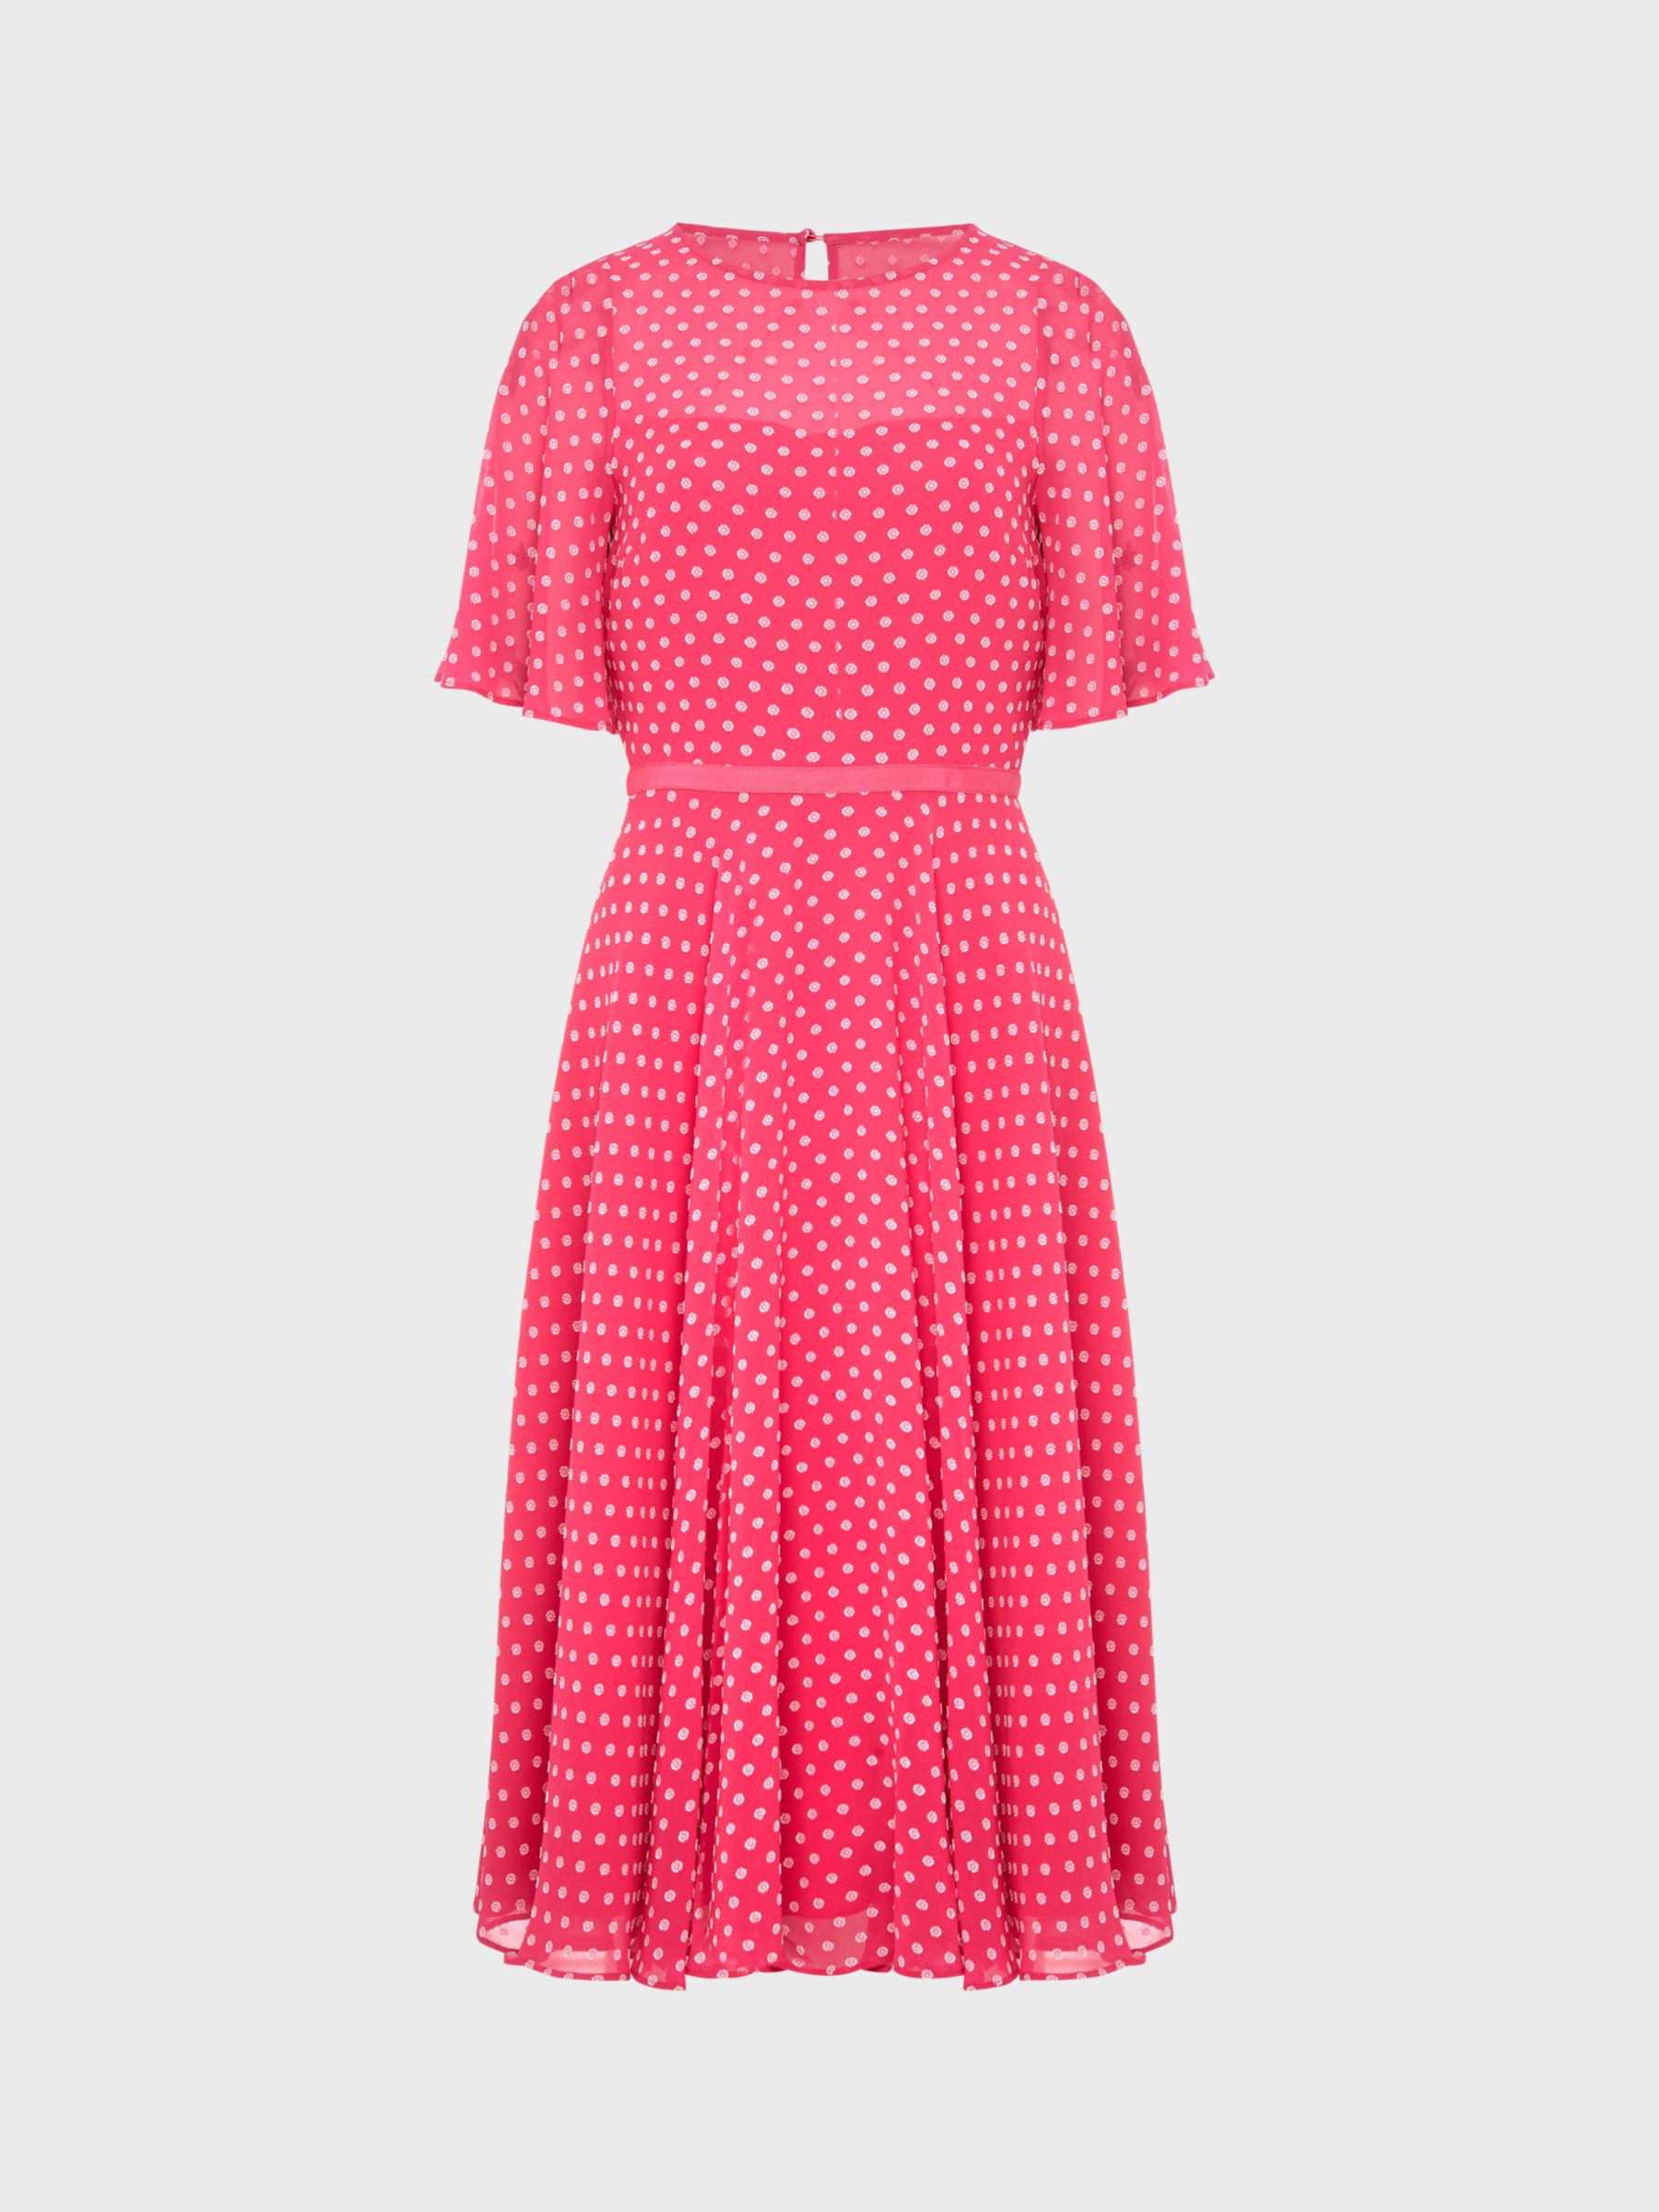 Hobbs Eleanor Polka Dot Dress, Pink/Ivory, 14